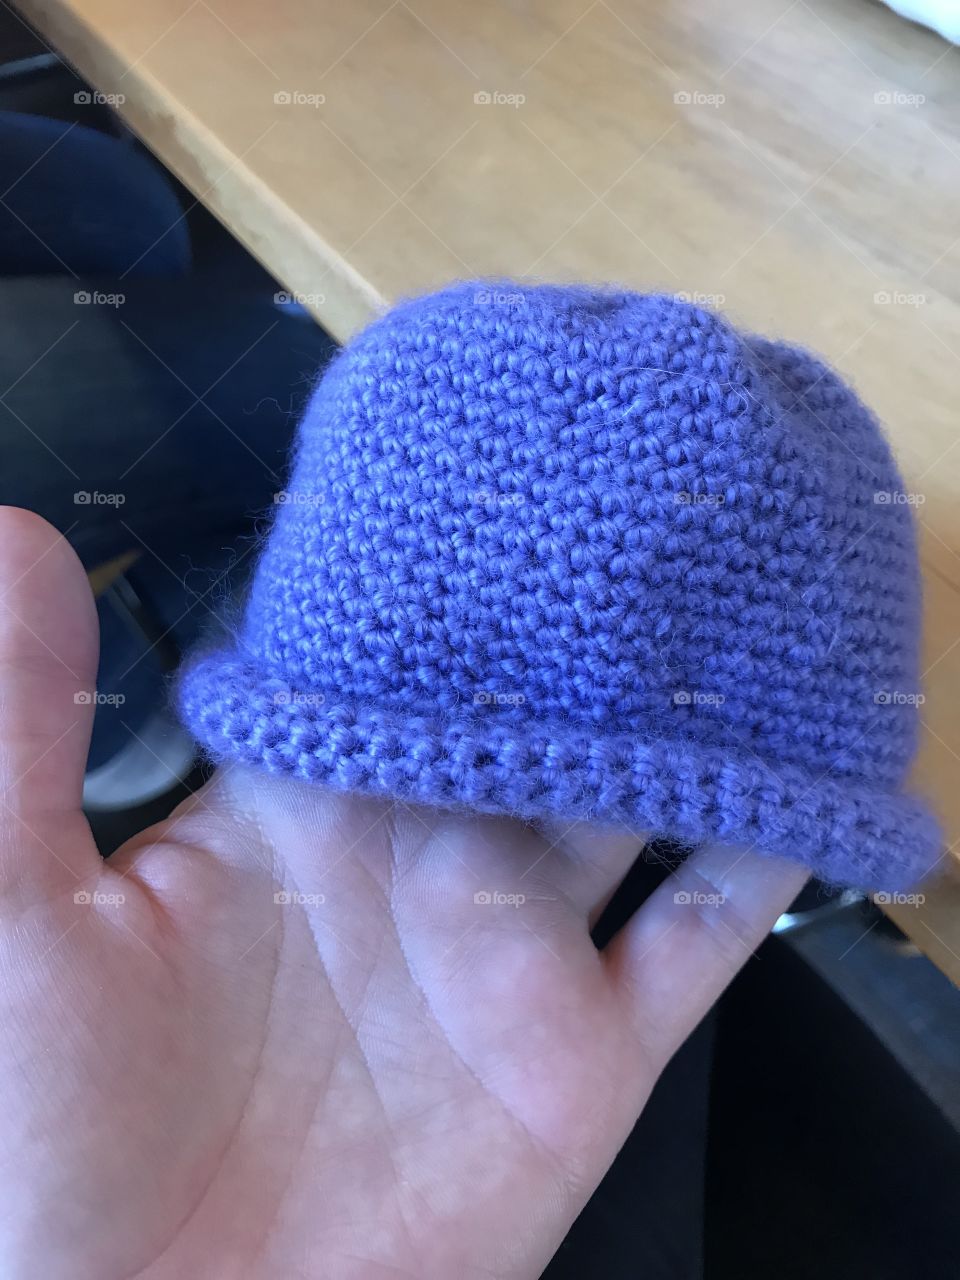 Crocheted baby hat